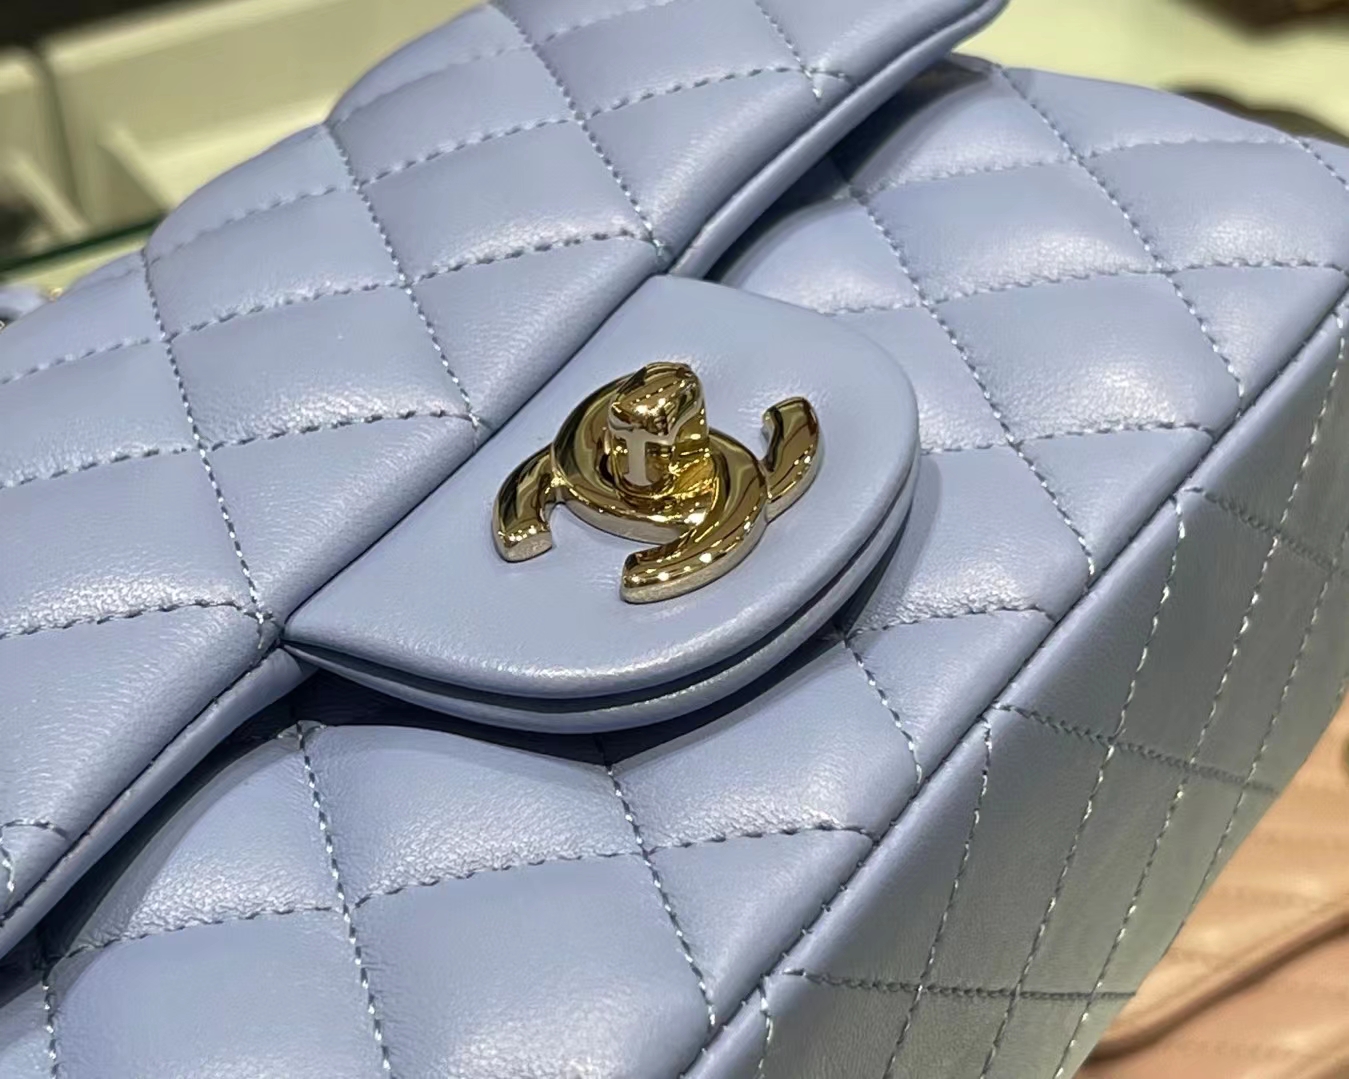 Chanel（香奈儿）Ohanel CF 链条包 粉蓝色 金链 金扣 20cm